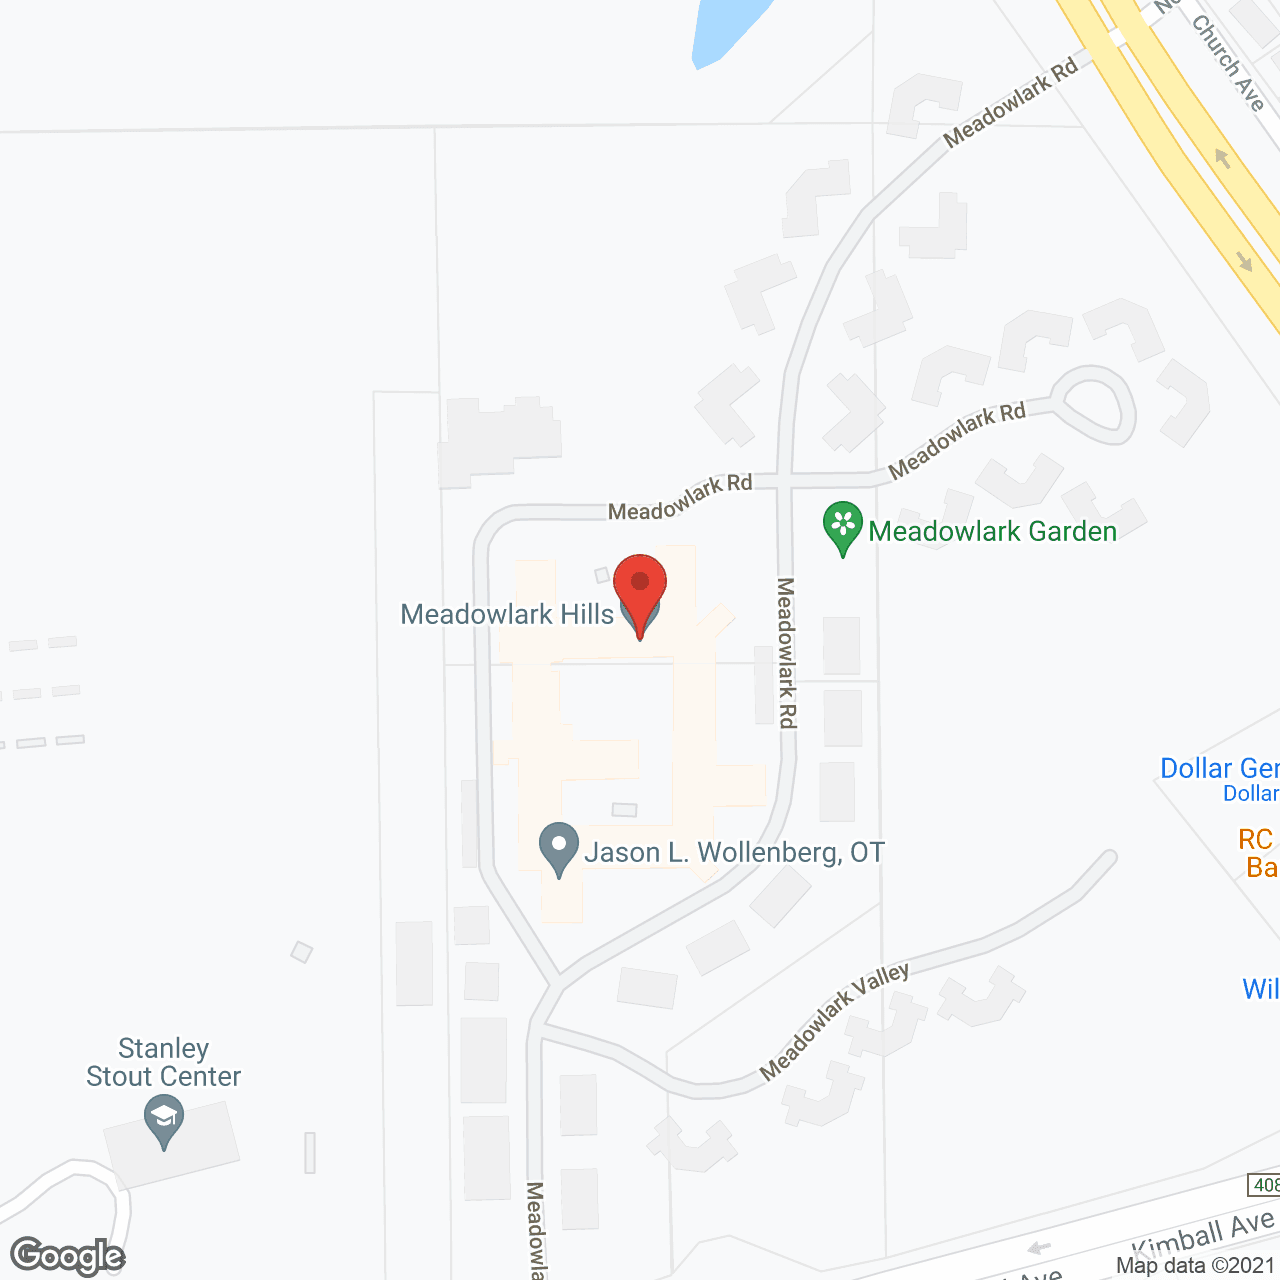 Meadowlark Hills in google map